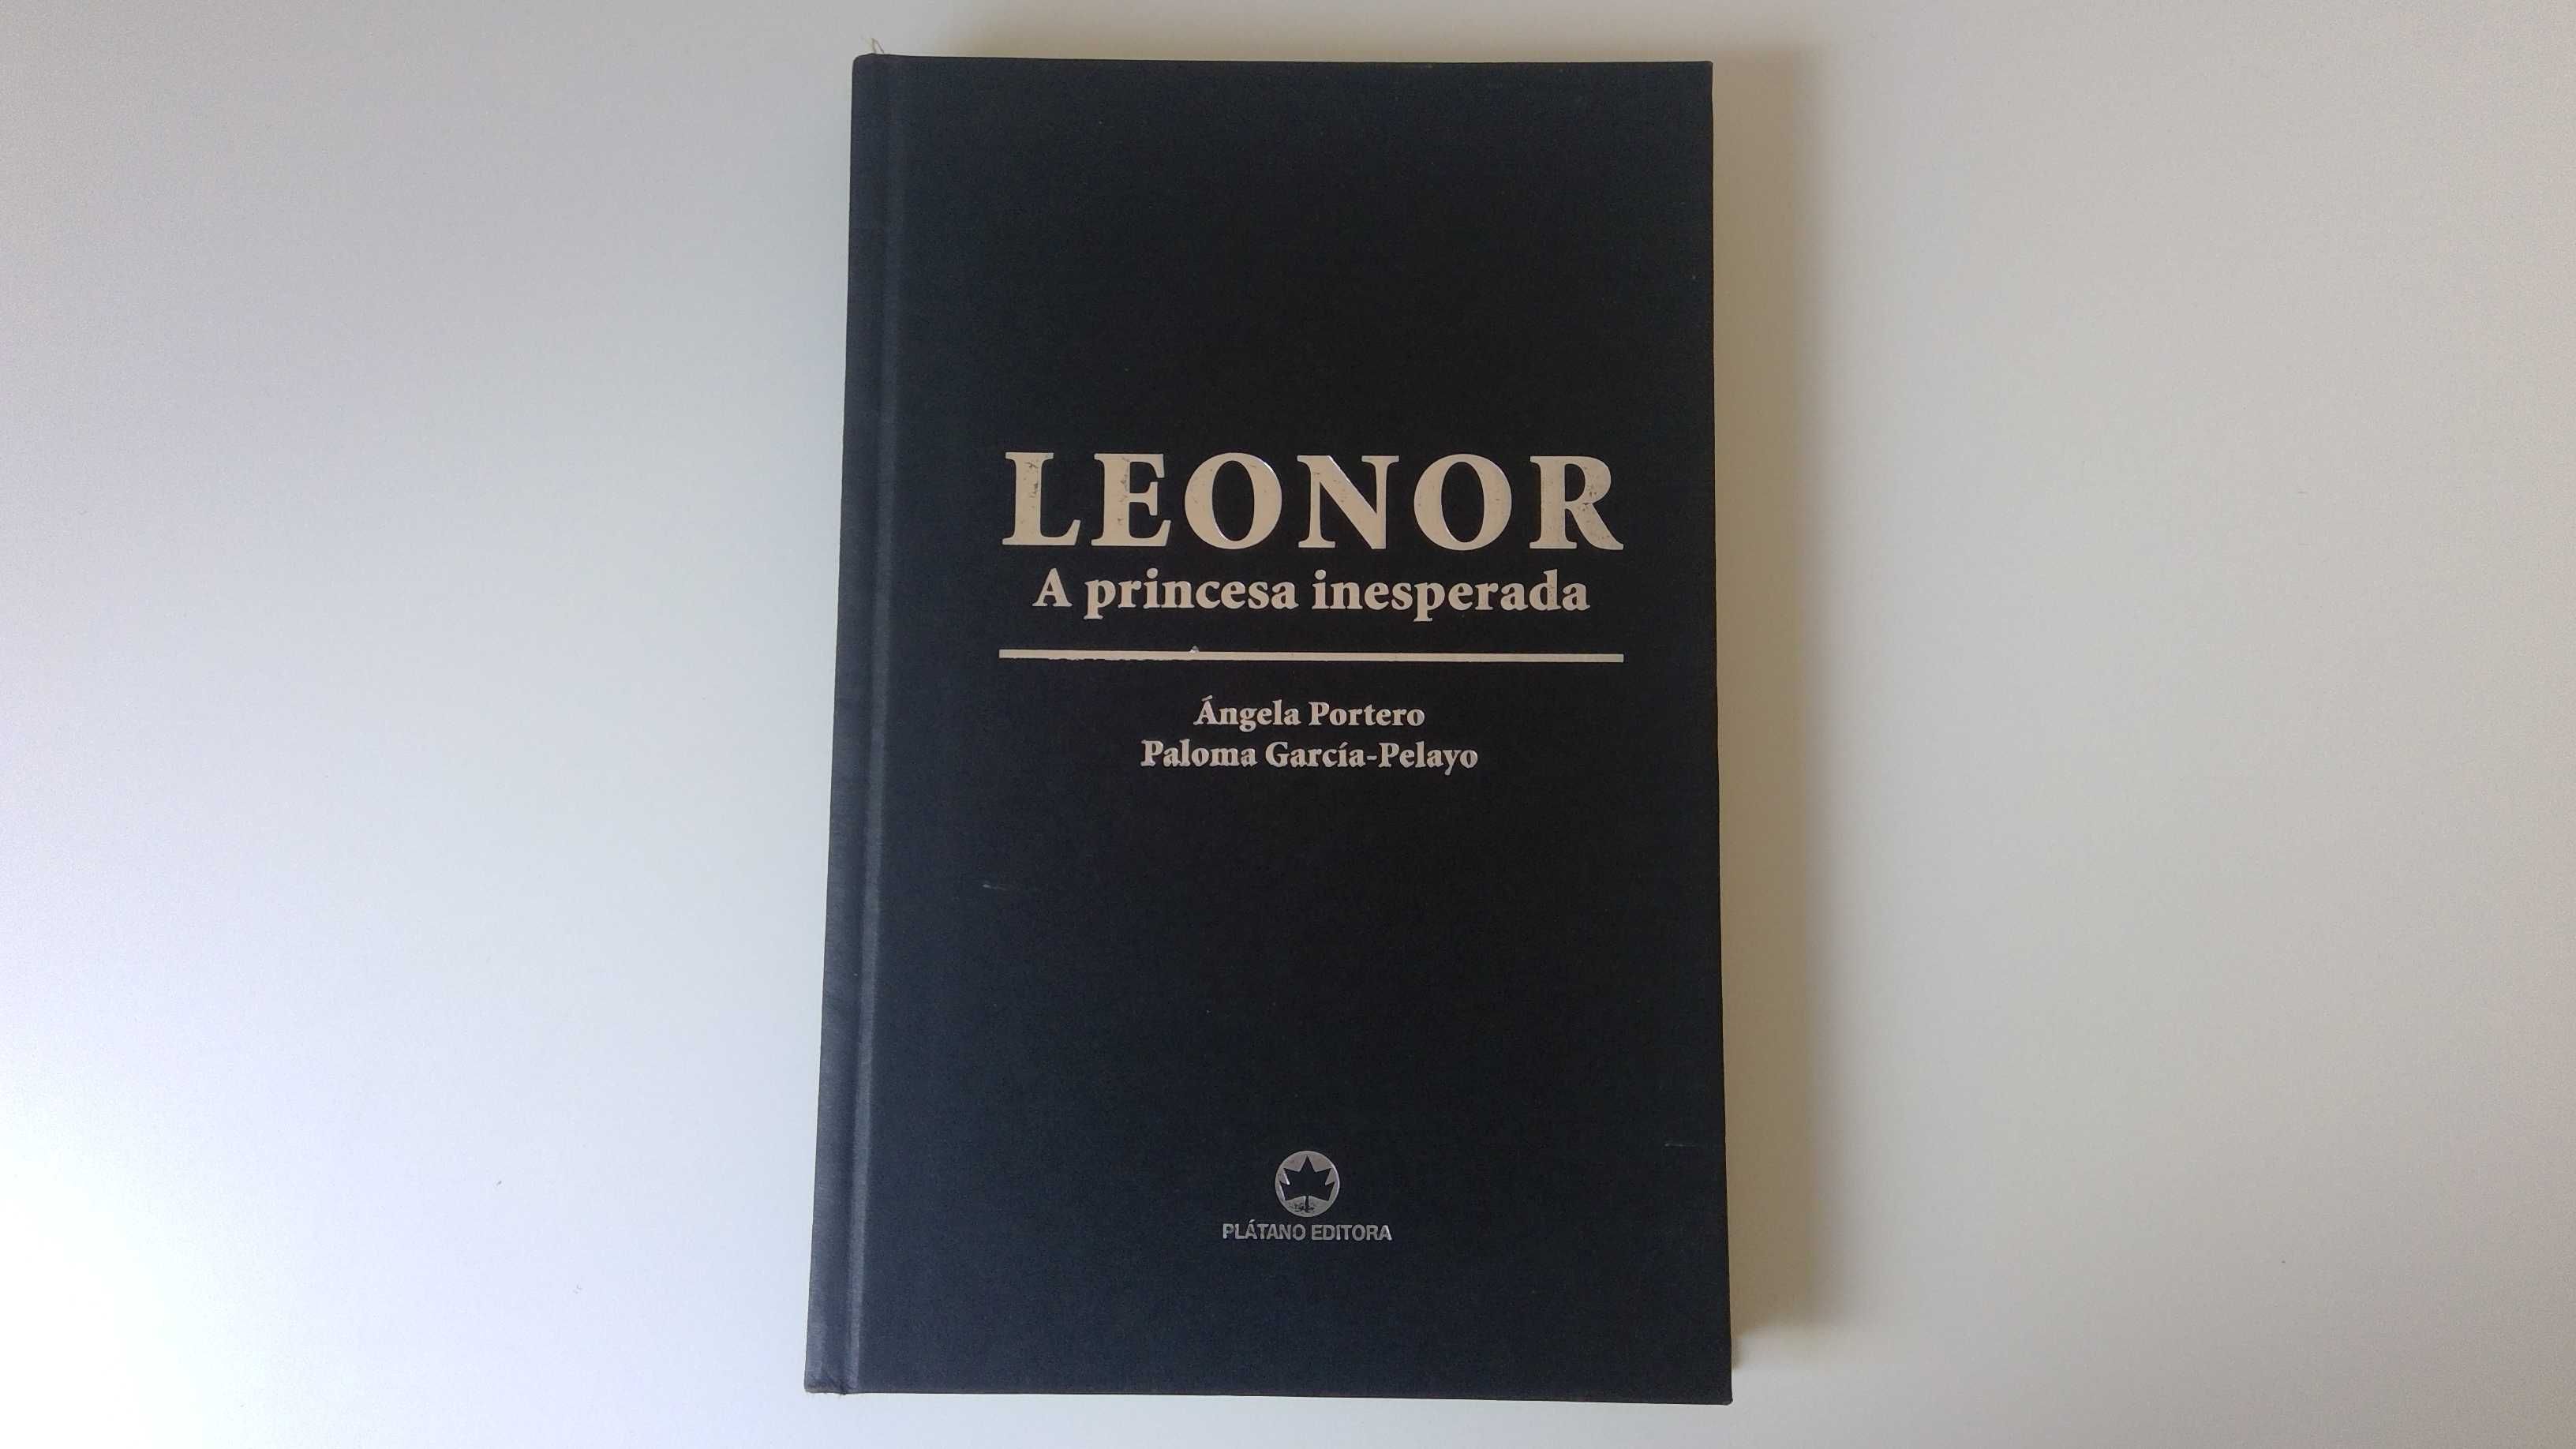 Livro "Leonor - A princesa inesperada"